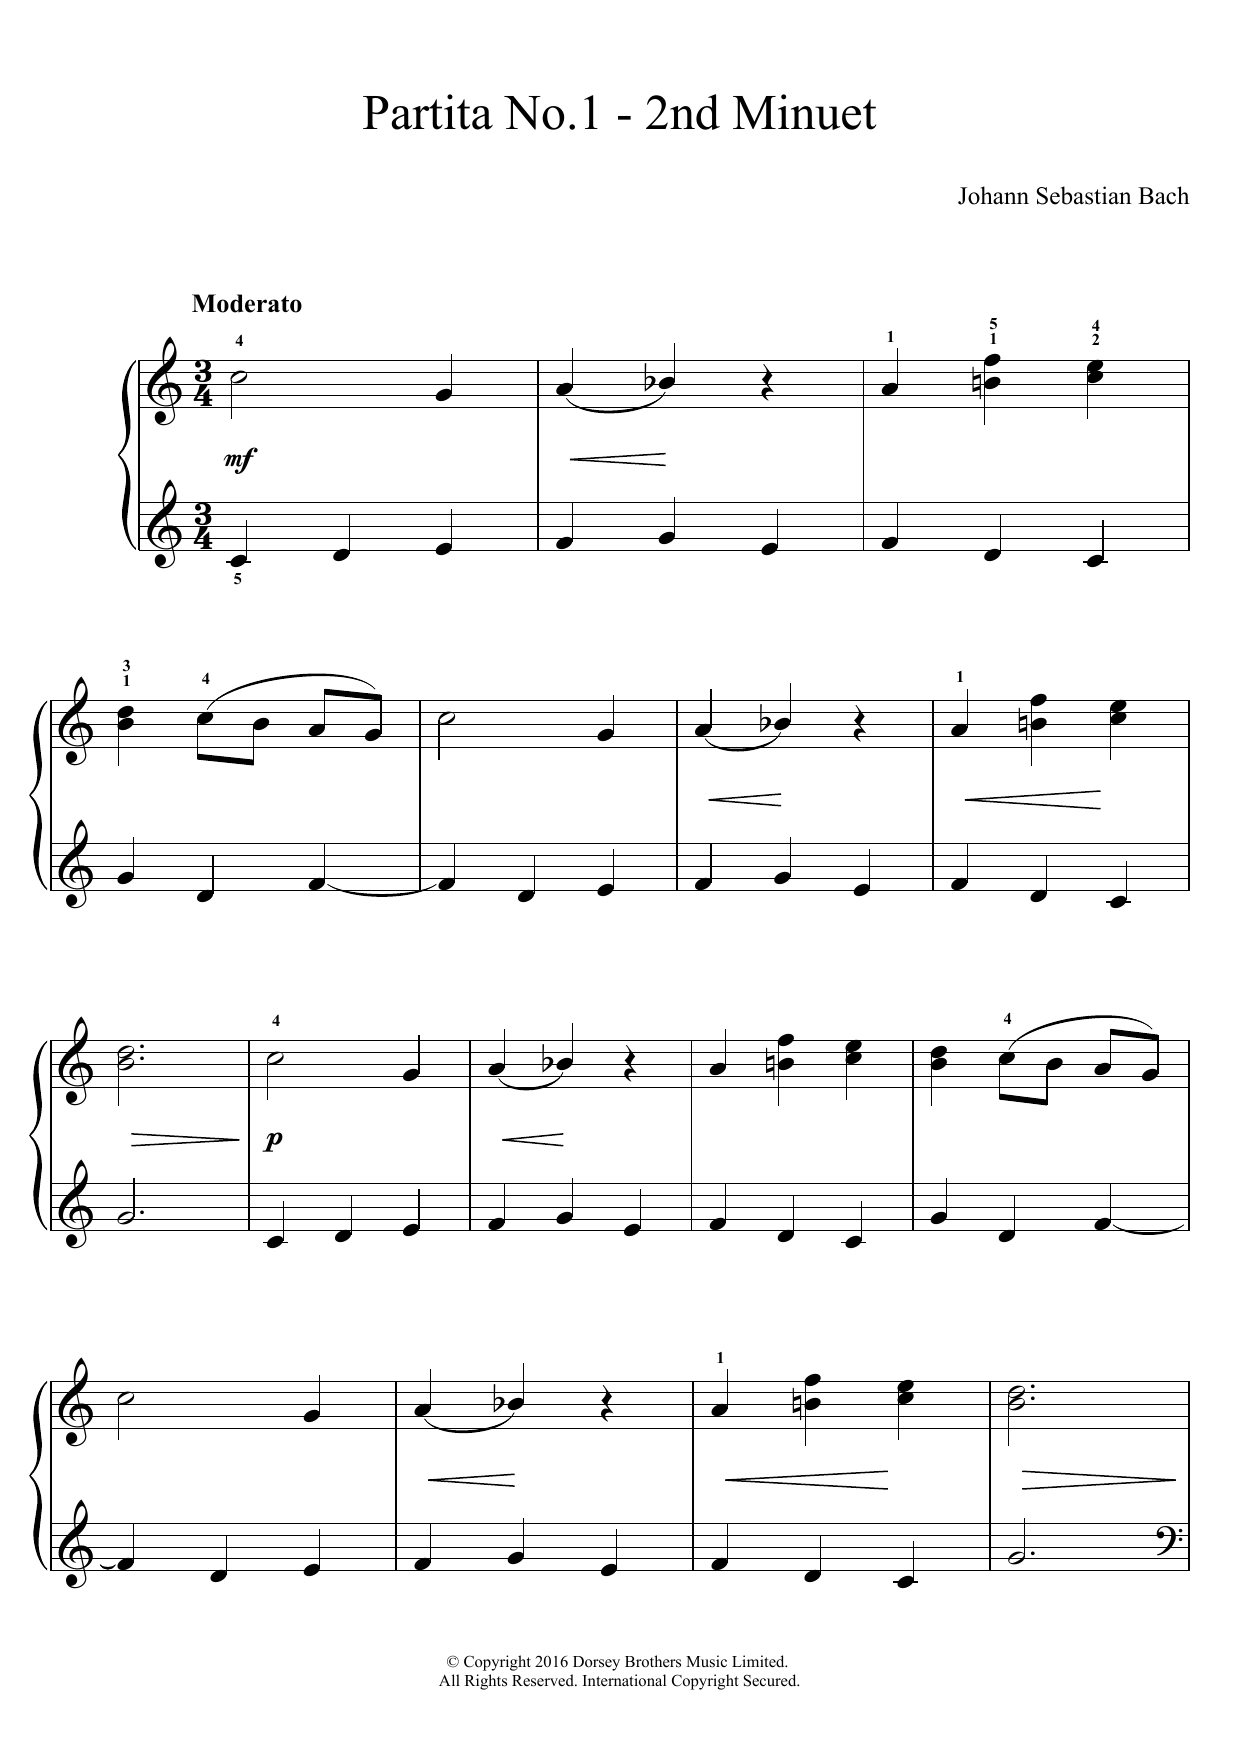 Johann Sebastian Bach Partita No. 1 - 2nd Minuet Sheet Music Notes & Chords for Easy Piano - Download or Print PDF